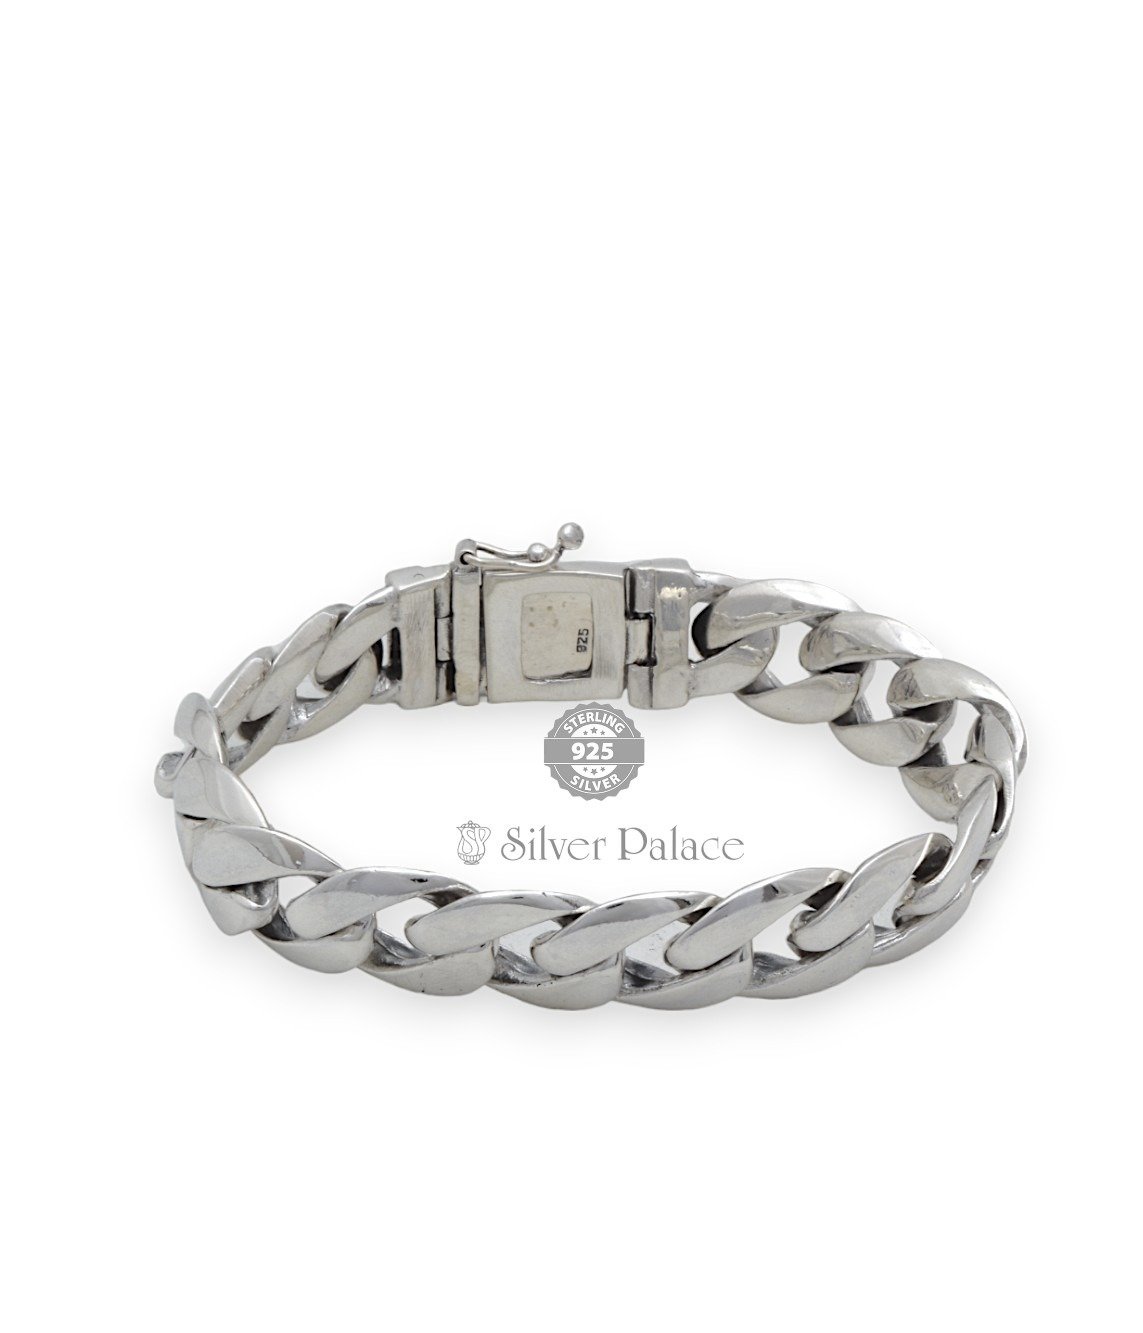 92.5 Sterling Silver Cuban Link Chain Bracelet For Boys